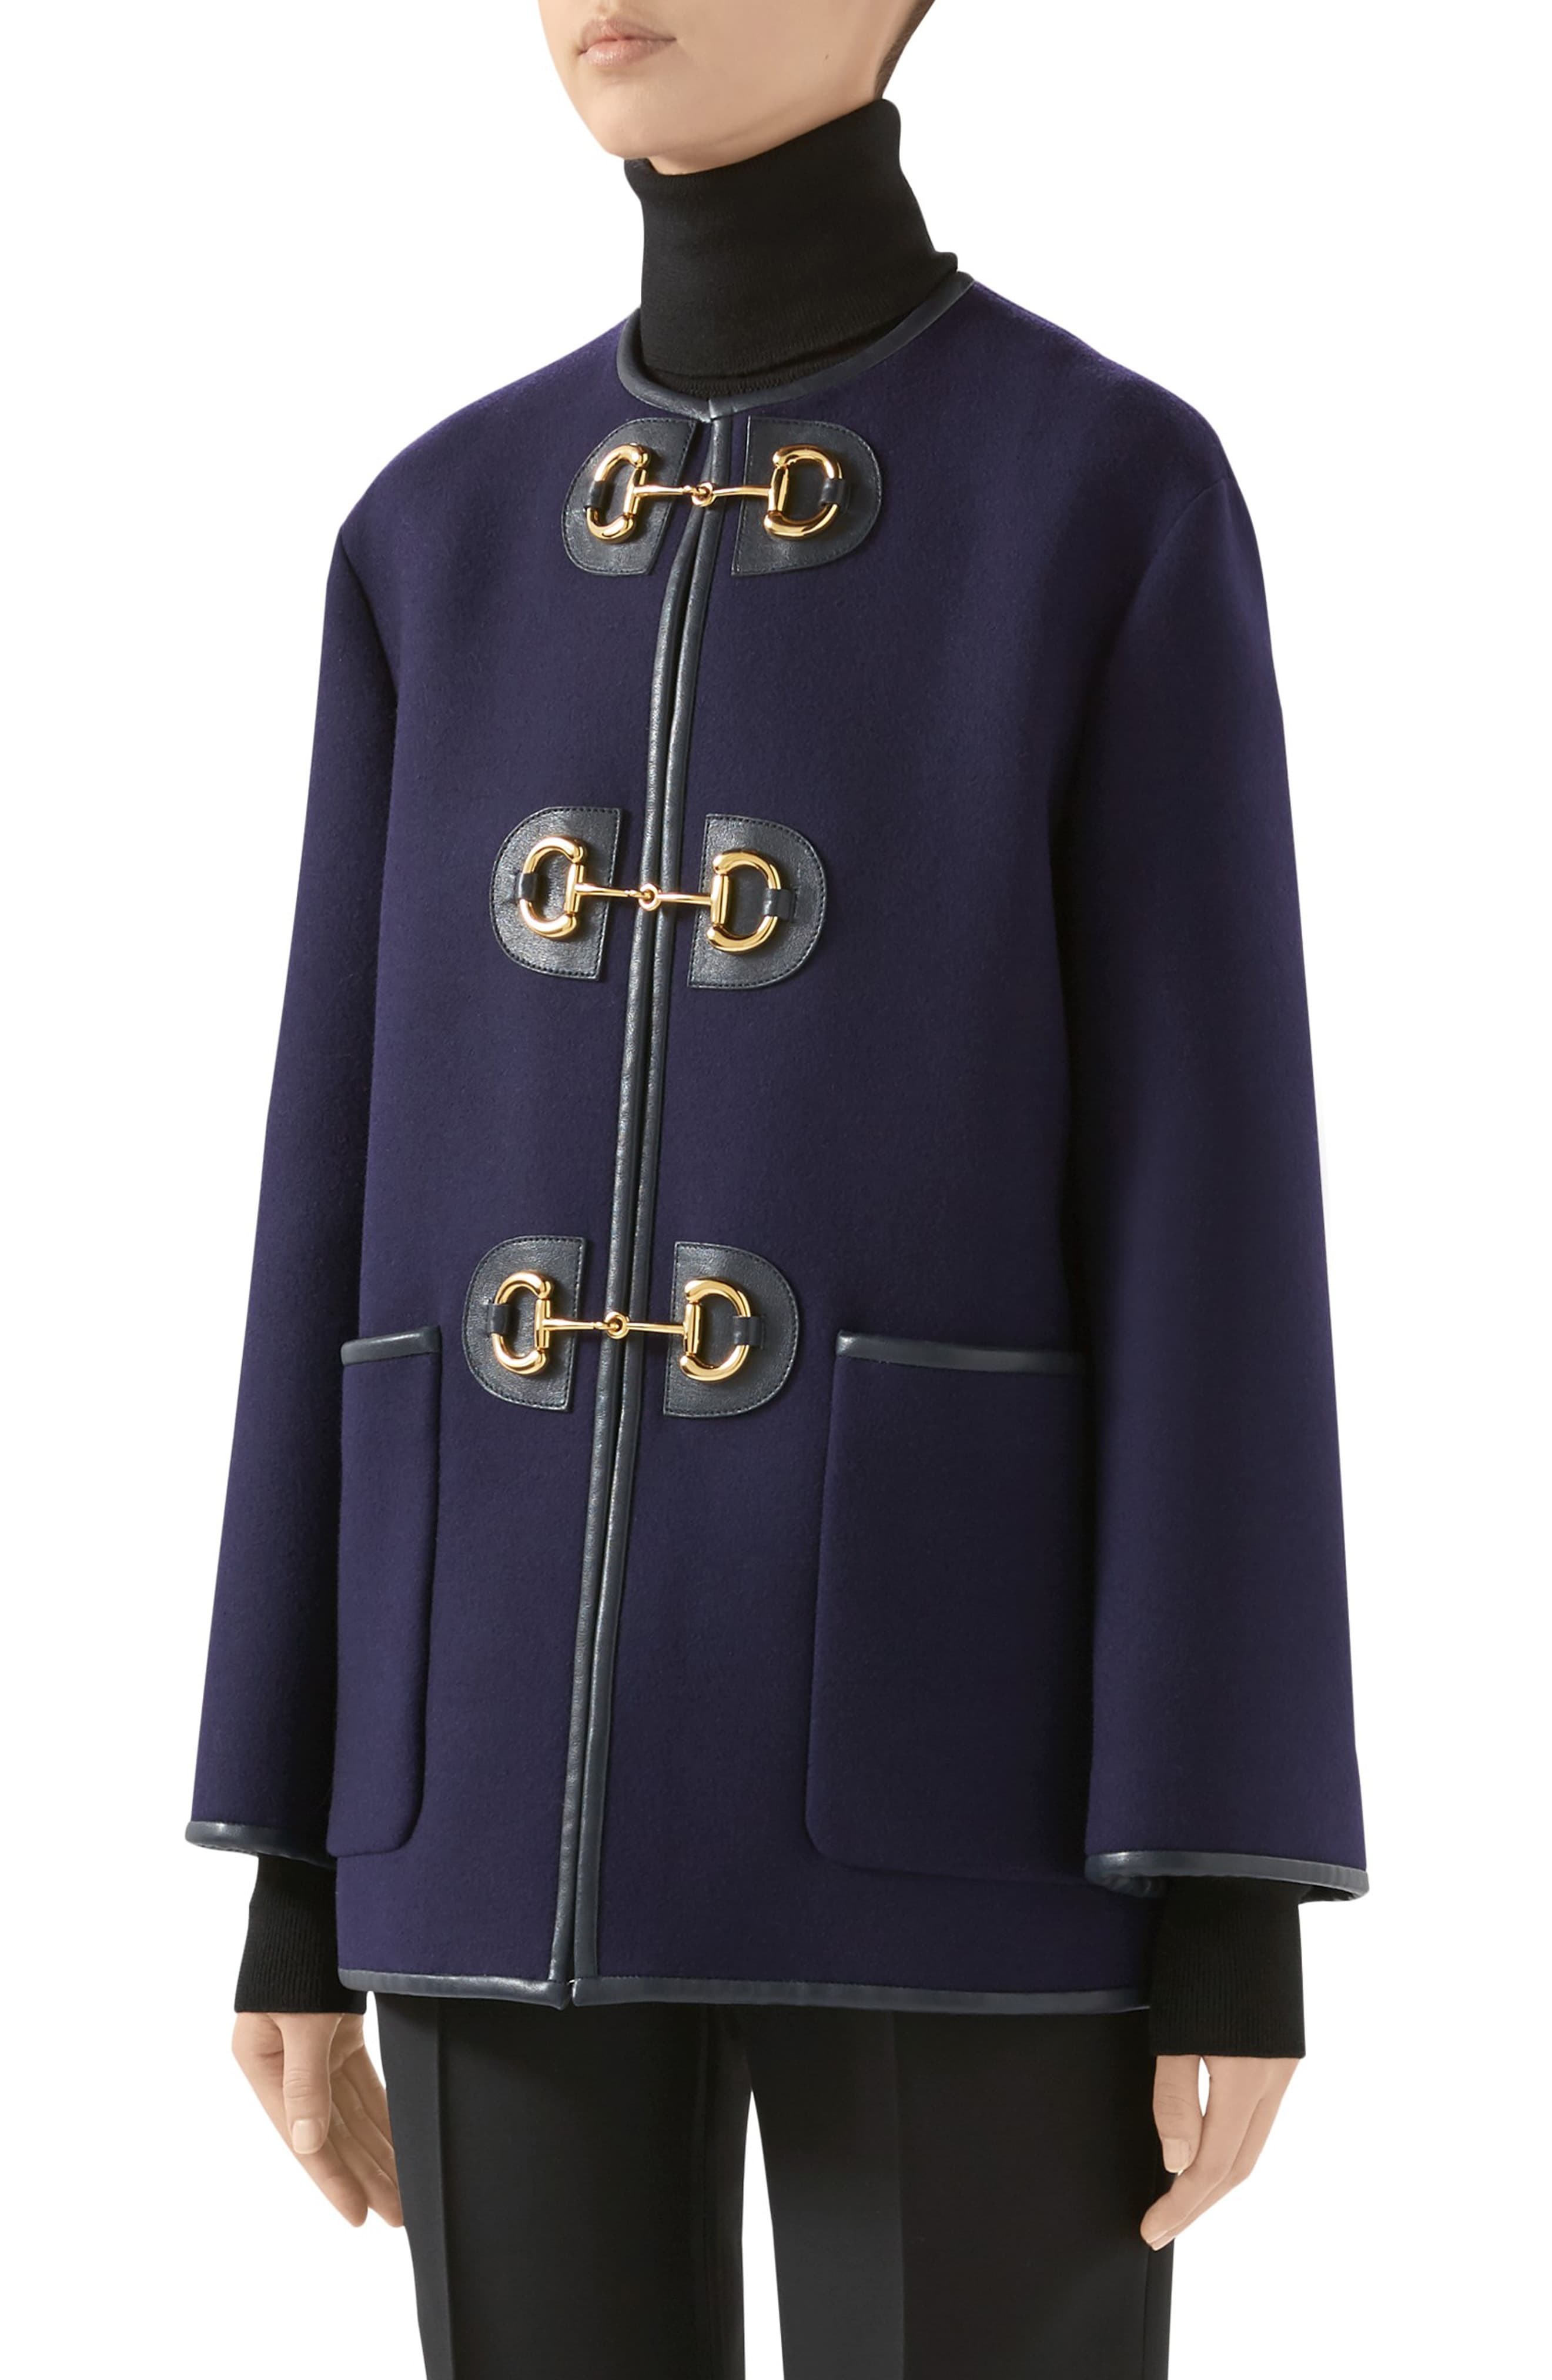 Gucci Horsebit Toggle Wool Military Caban Coat, $3,500 | Nordstrom